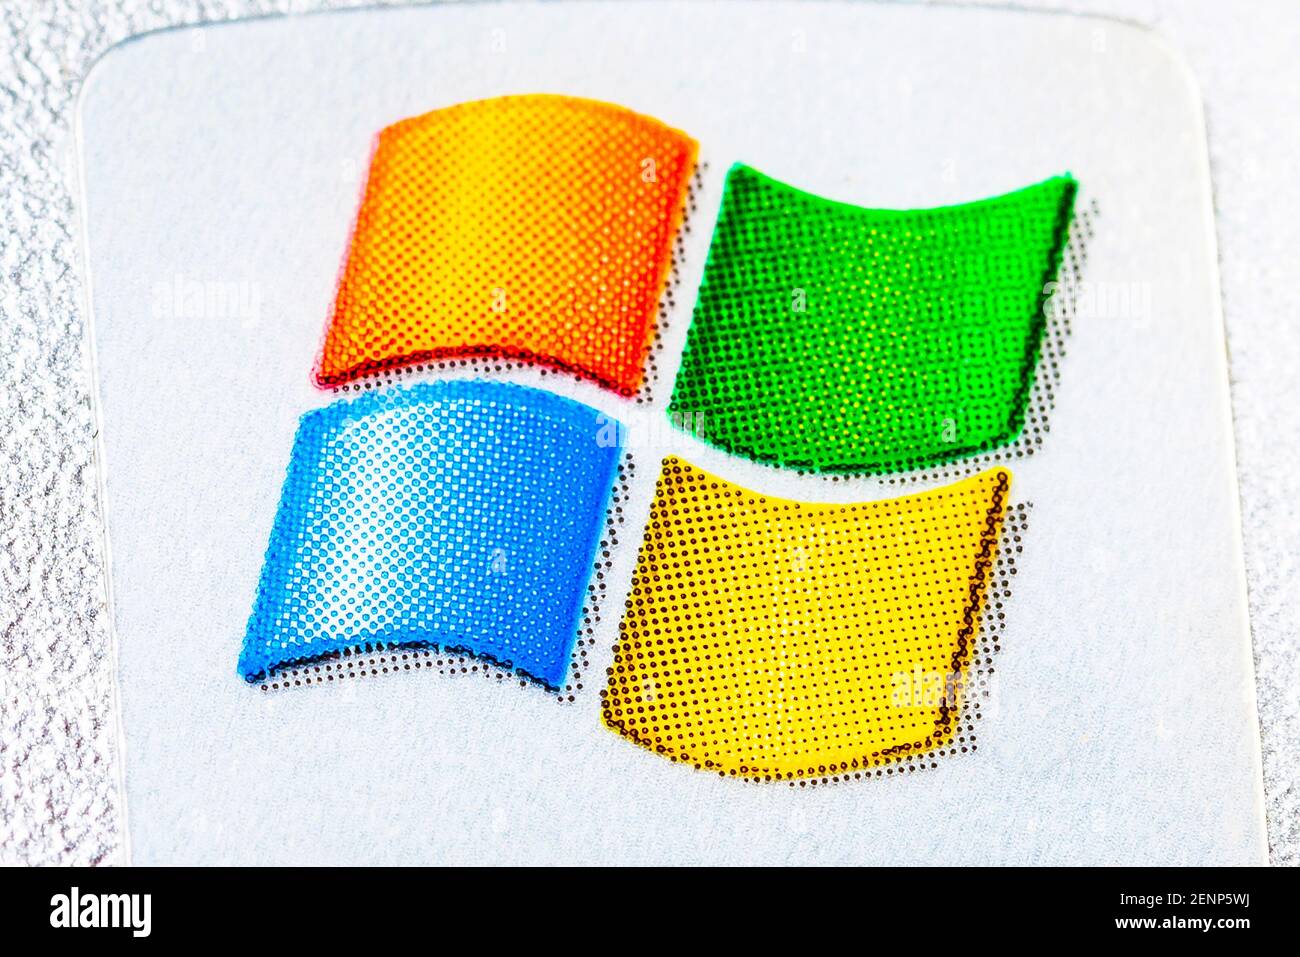 Microsoft Windows XP, Windows 7 operating system logo, brand ...